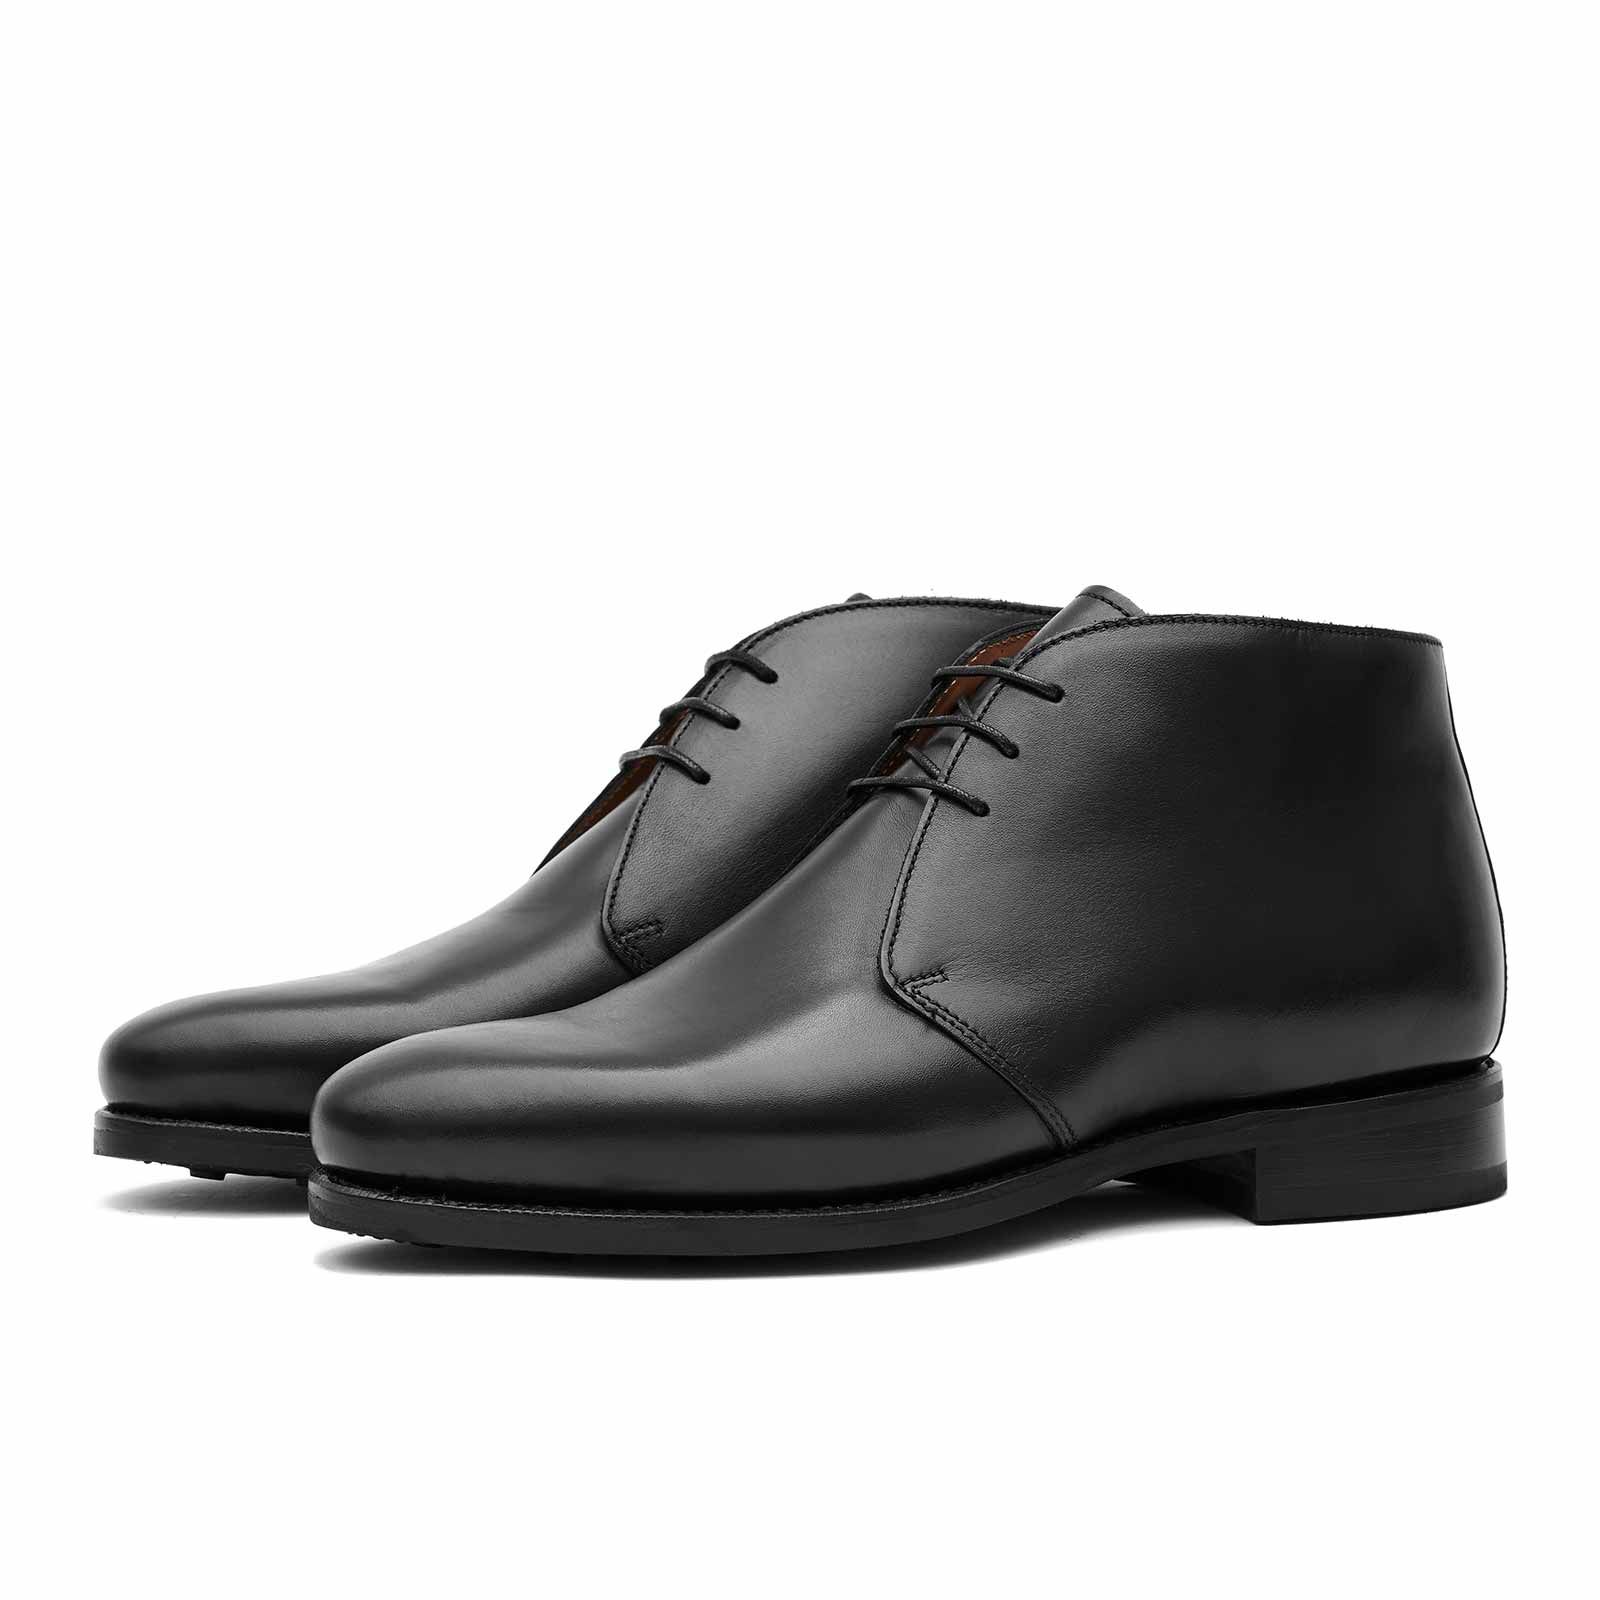 black leather chukka boots